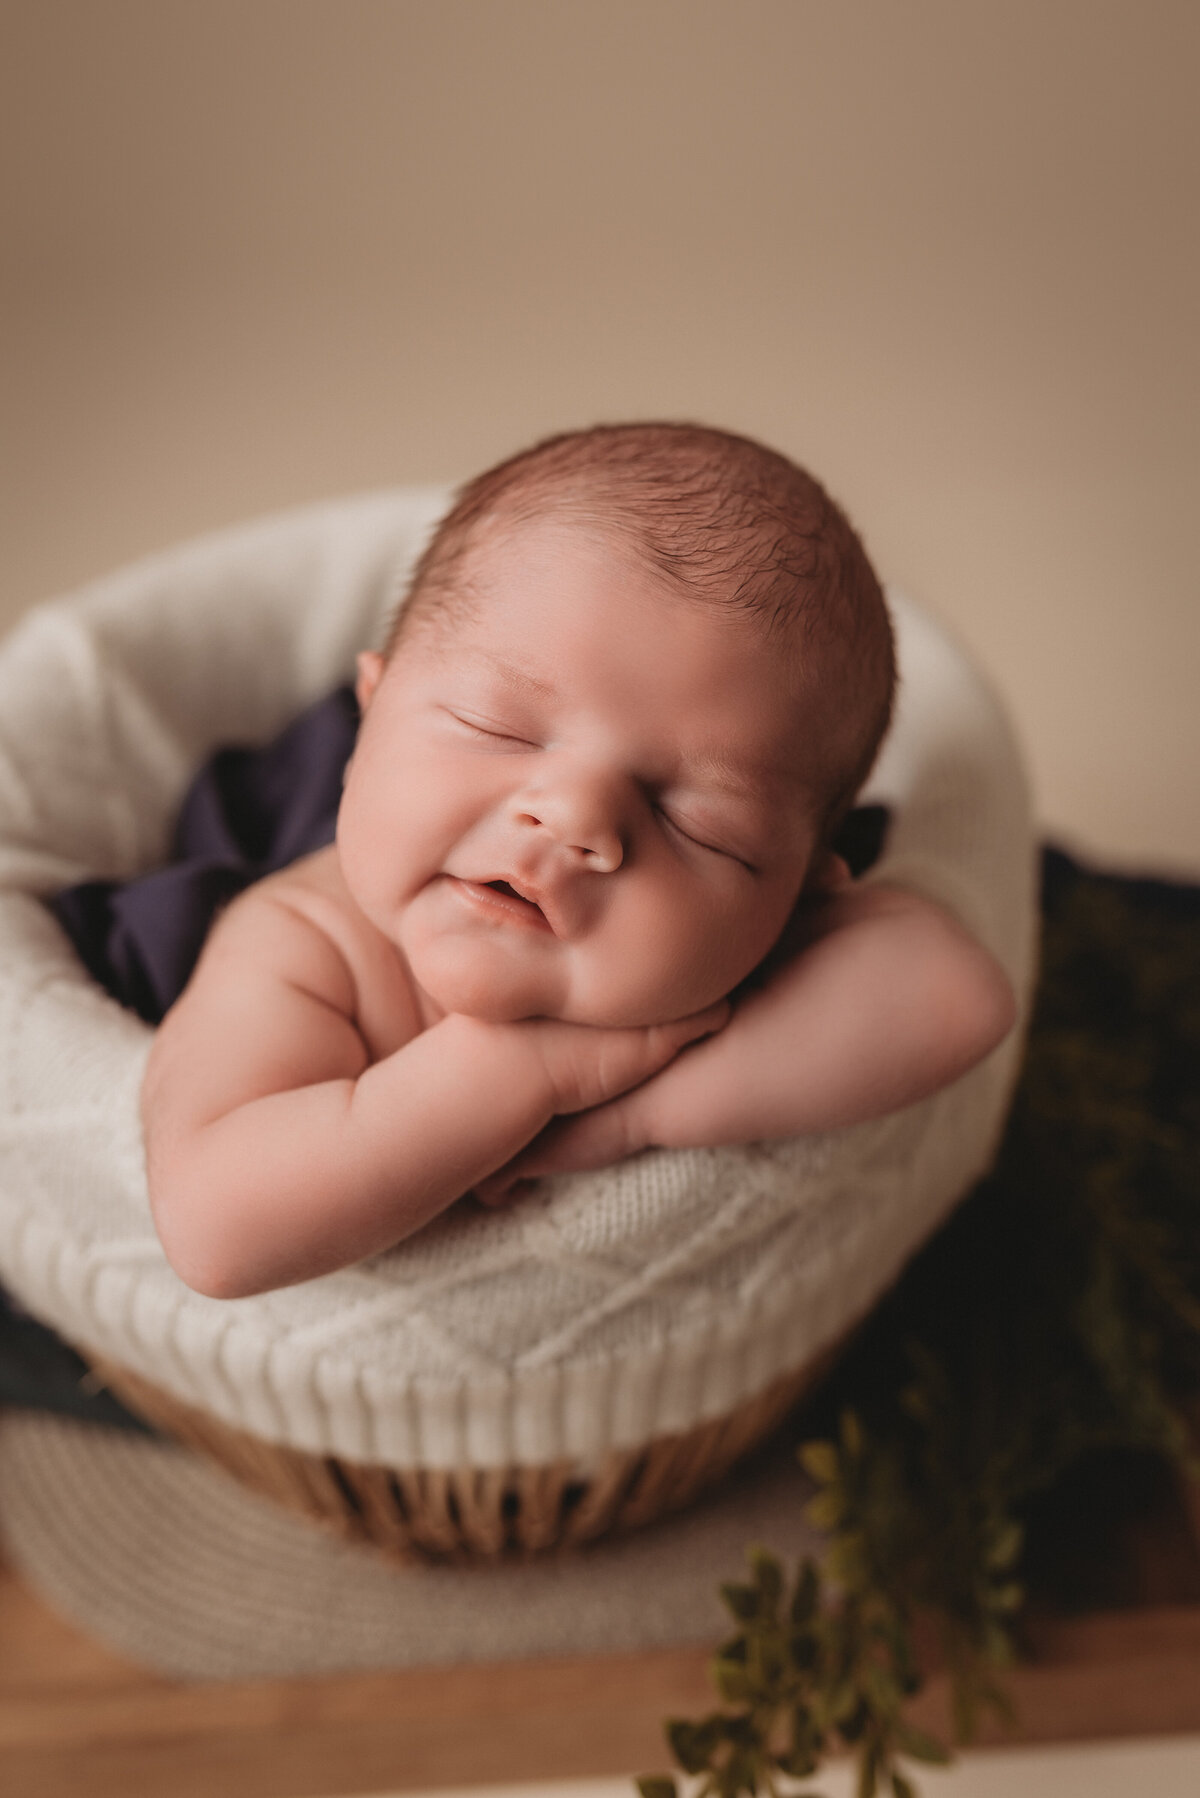 Newborn baby boy sitting in a rattan basket with hands under chin, on cream backdrop at atlanta portrait studio for newborn photography